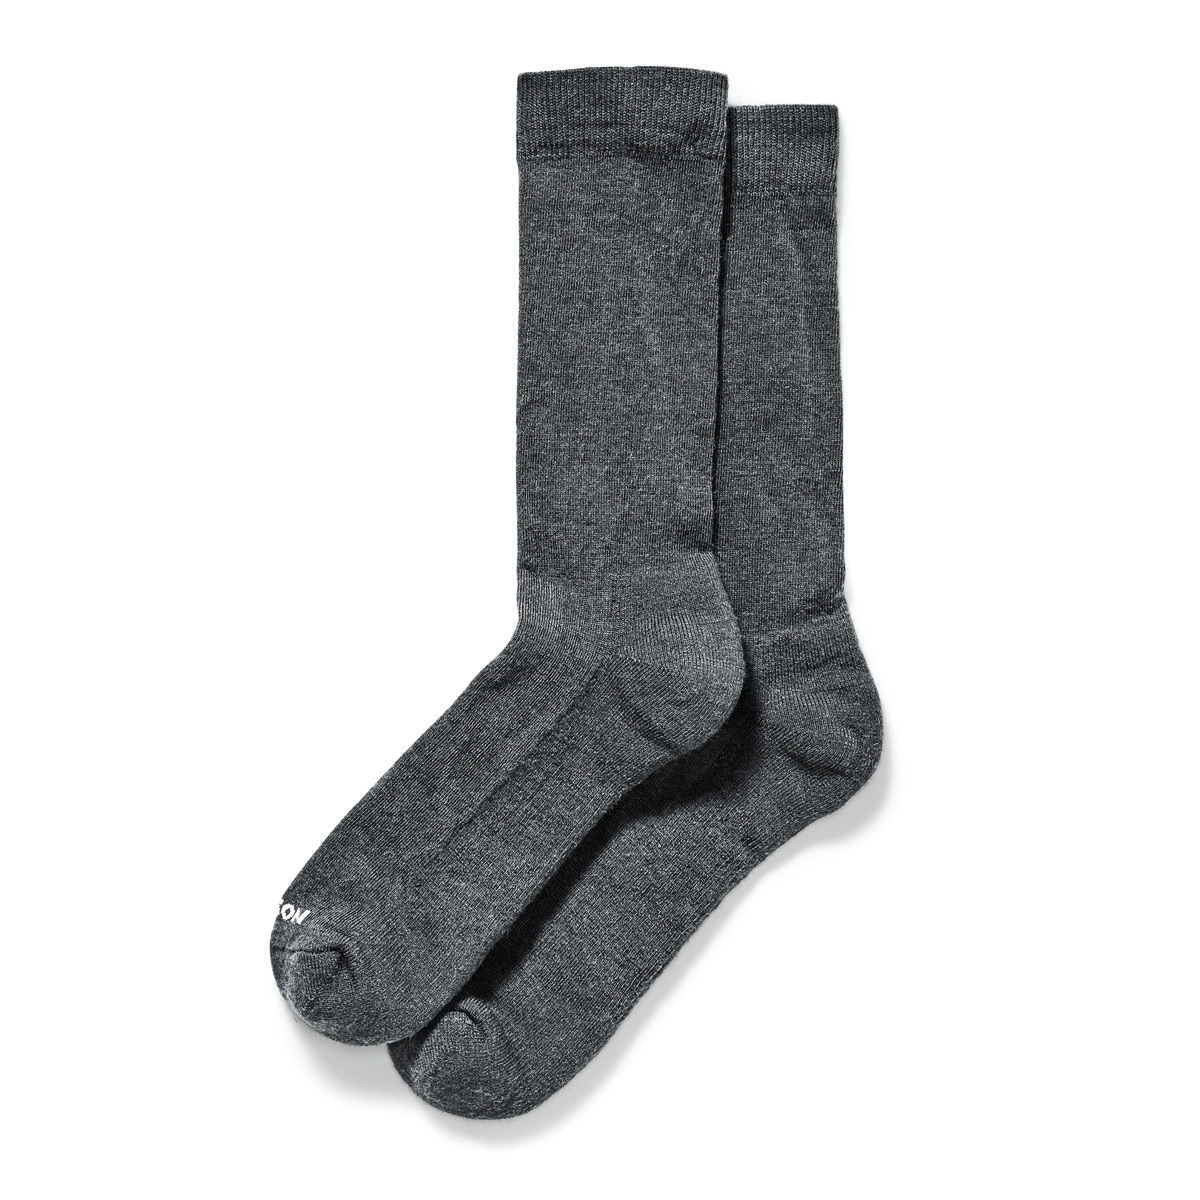 Filson Everyday Crew Sock Charcoal, versatile socks made of a